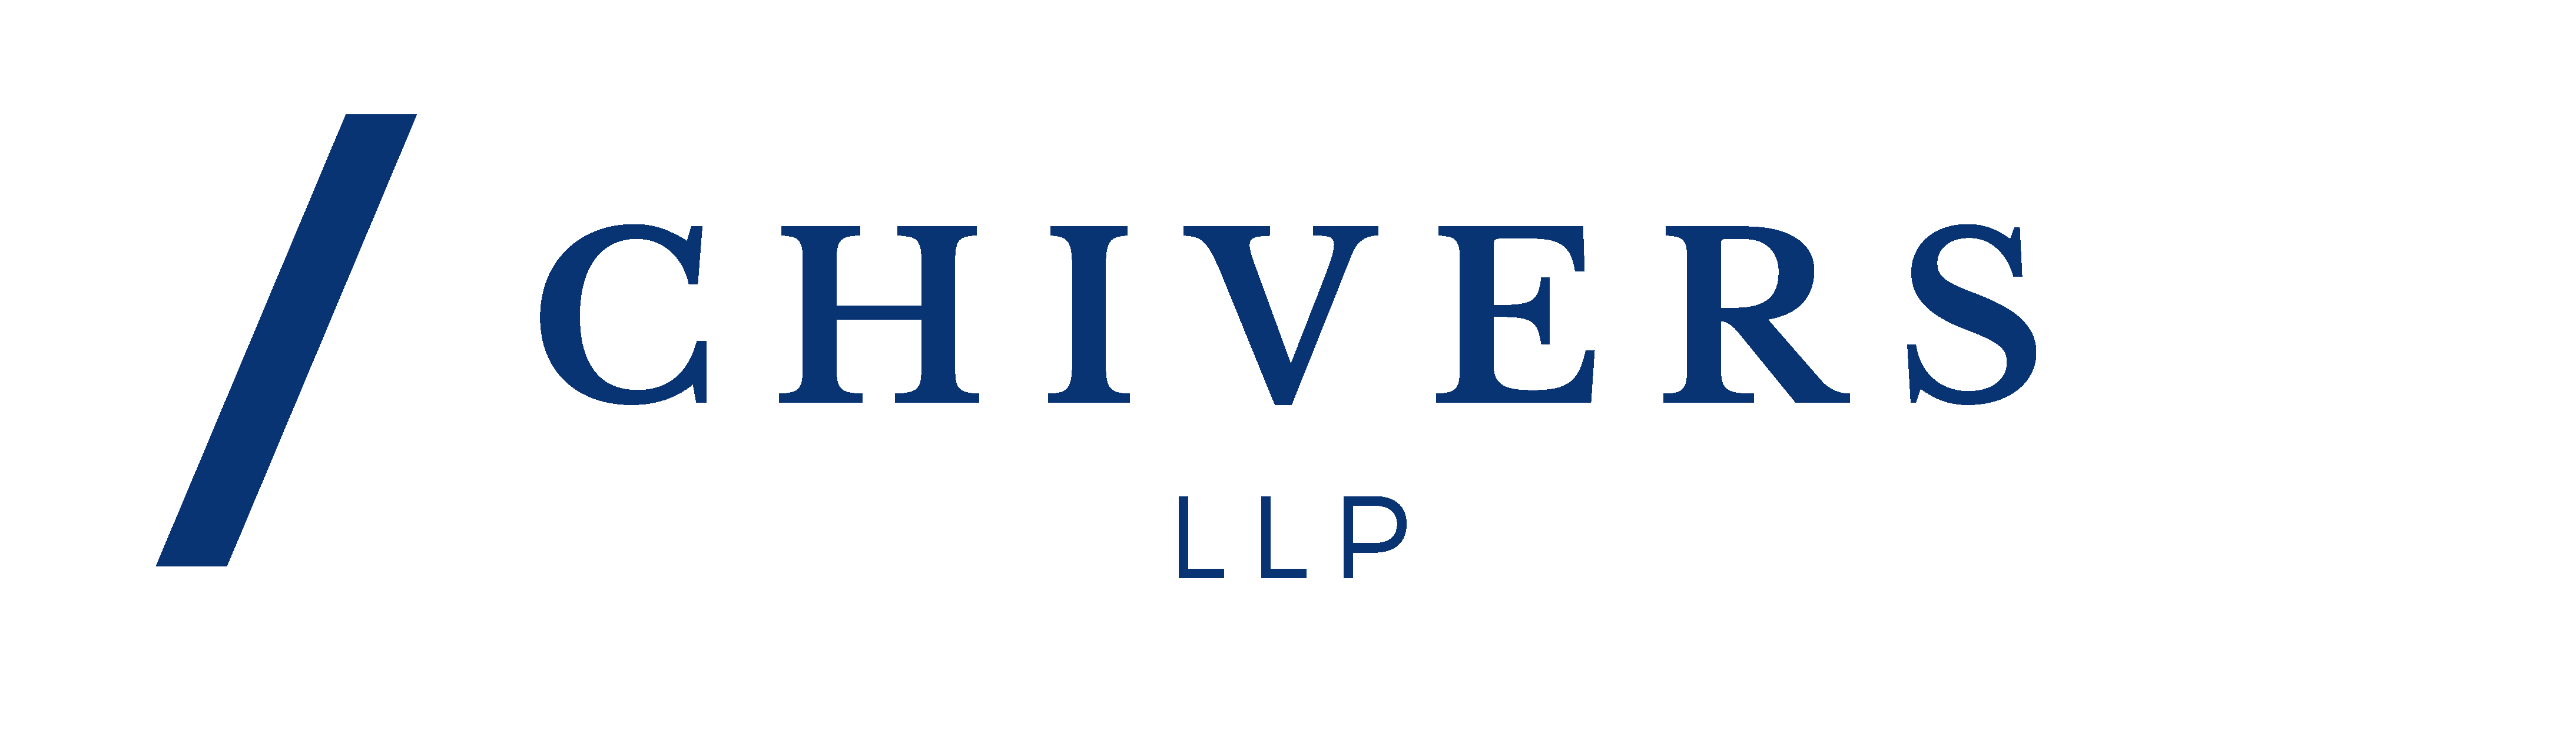 Chivers LLP logo